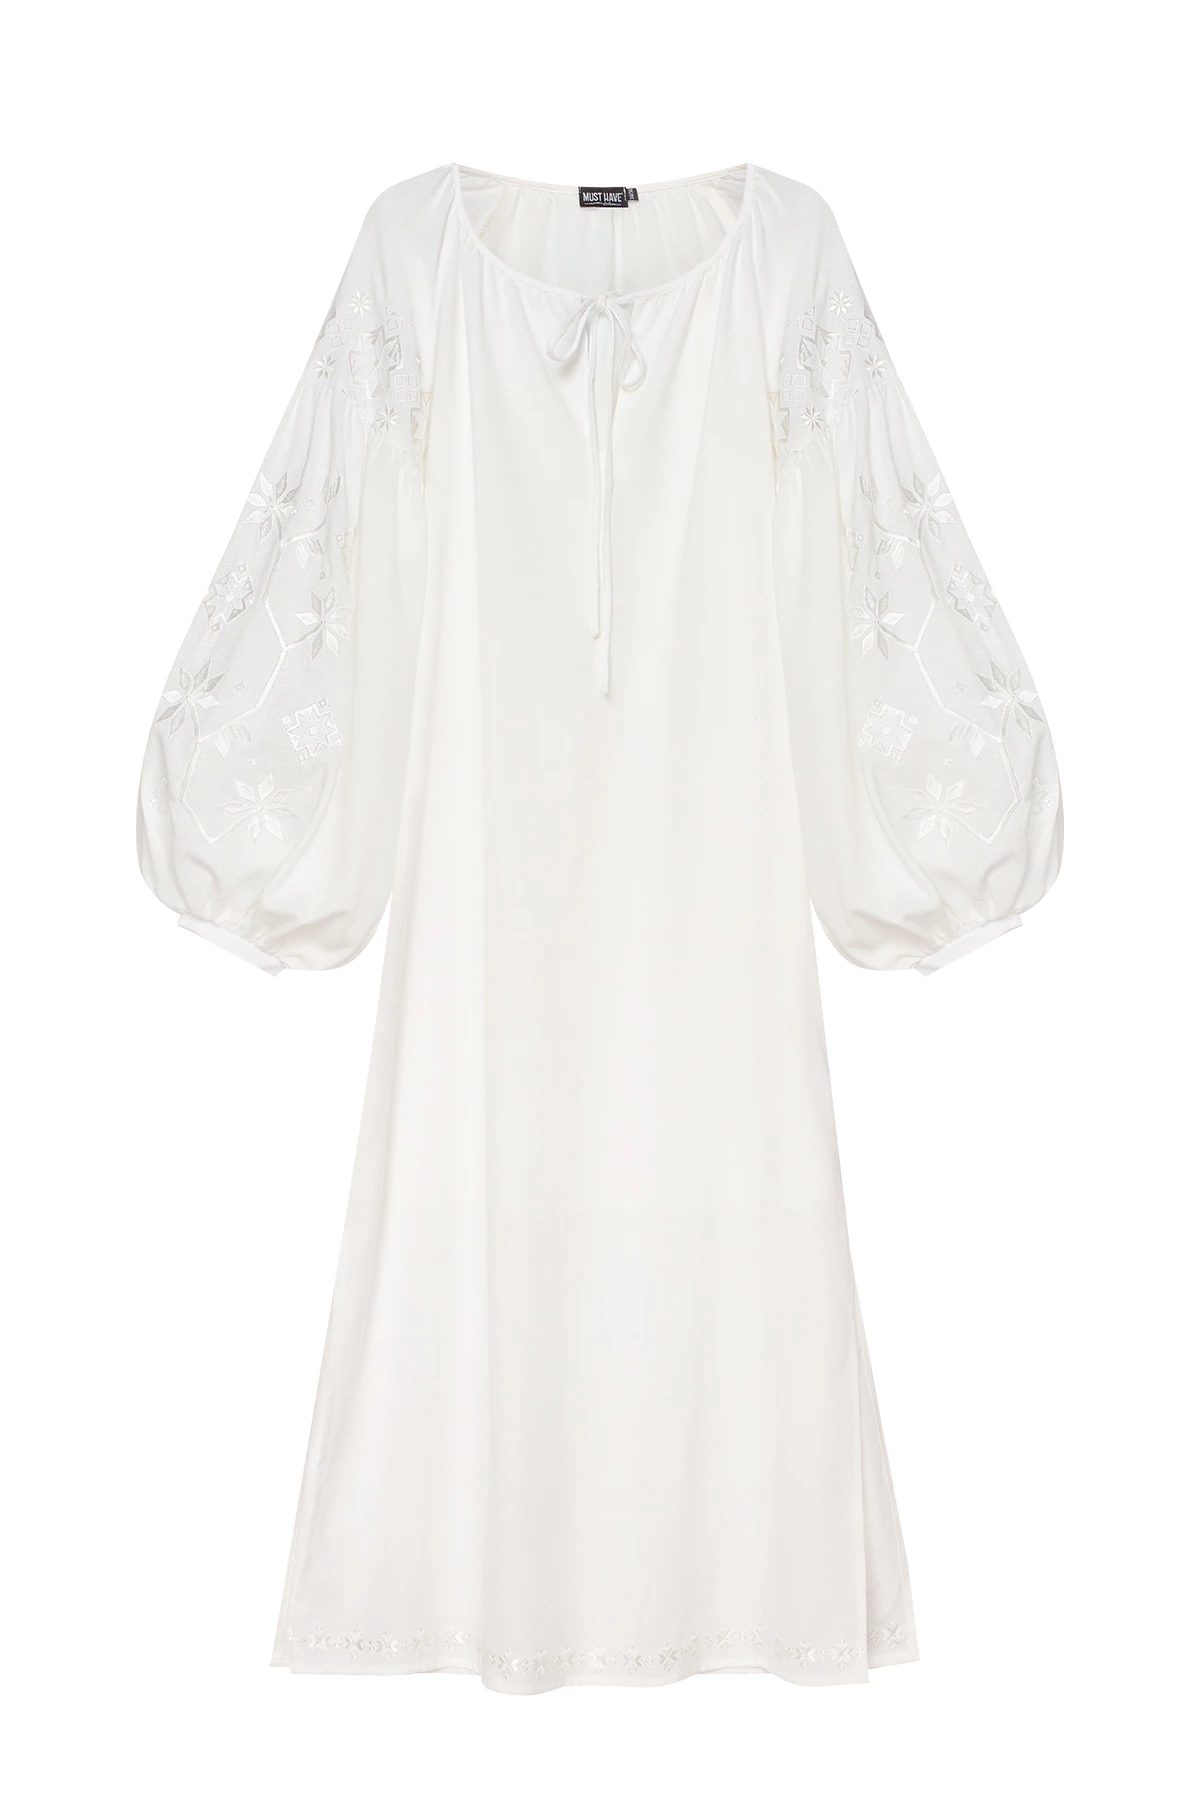 Milky linen vyshyvanka dress with milky Virgin Mary star embroidery, photo 6